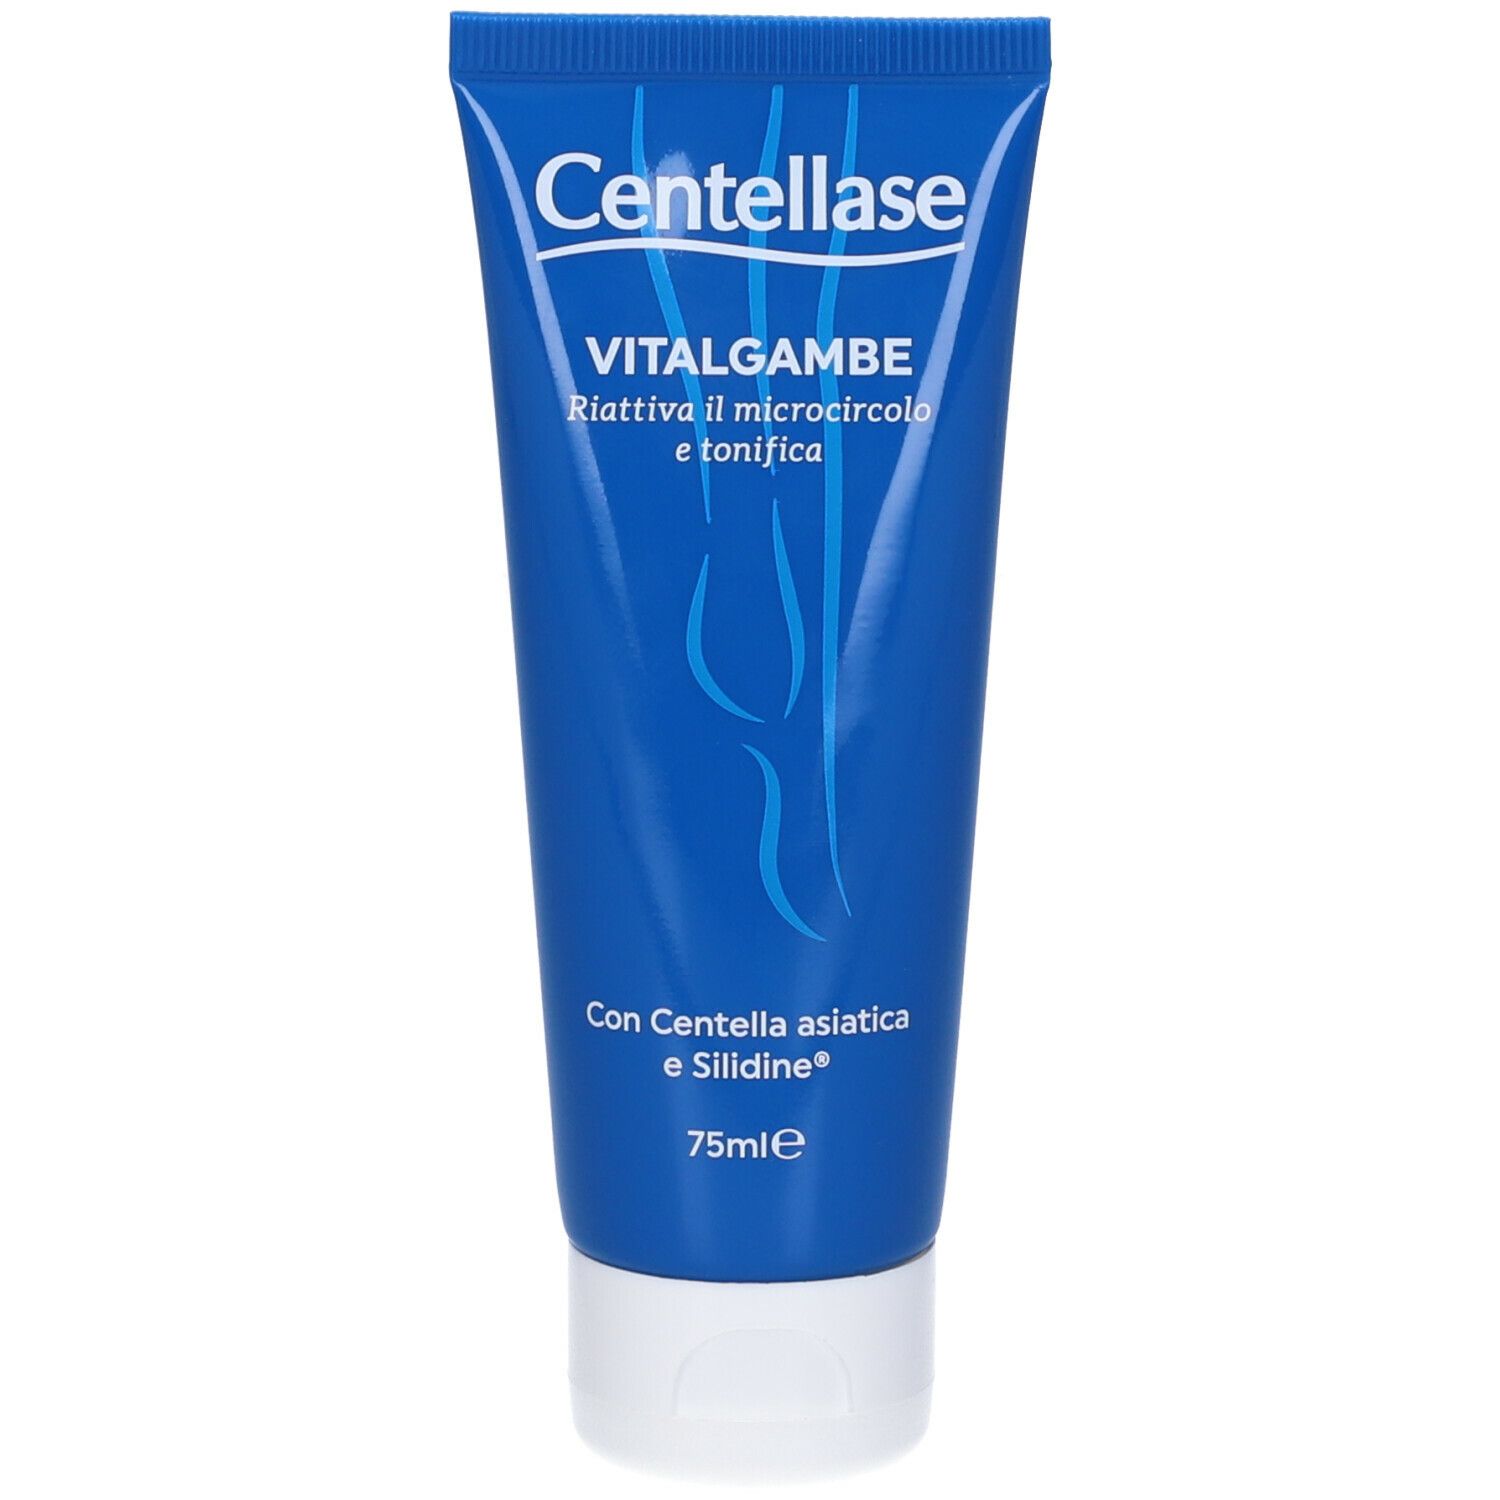 Centellase® Vital Gambe